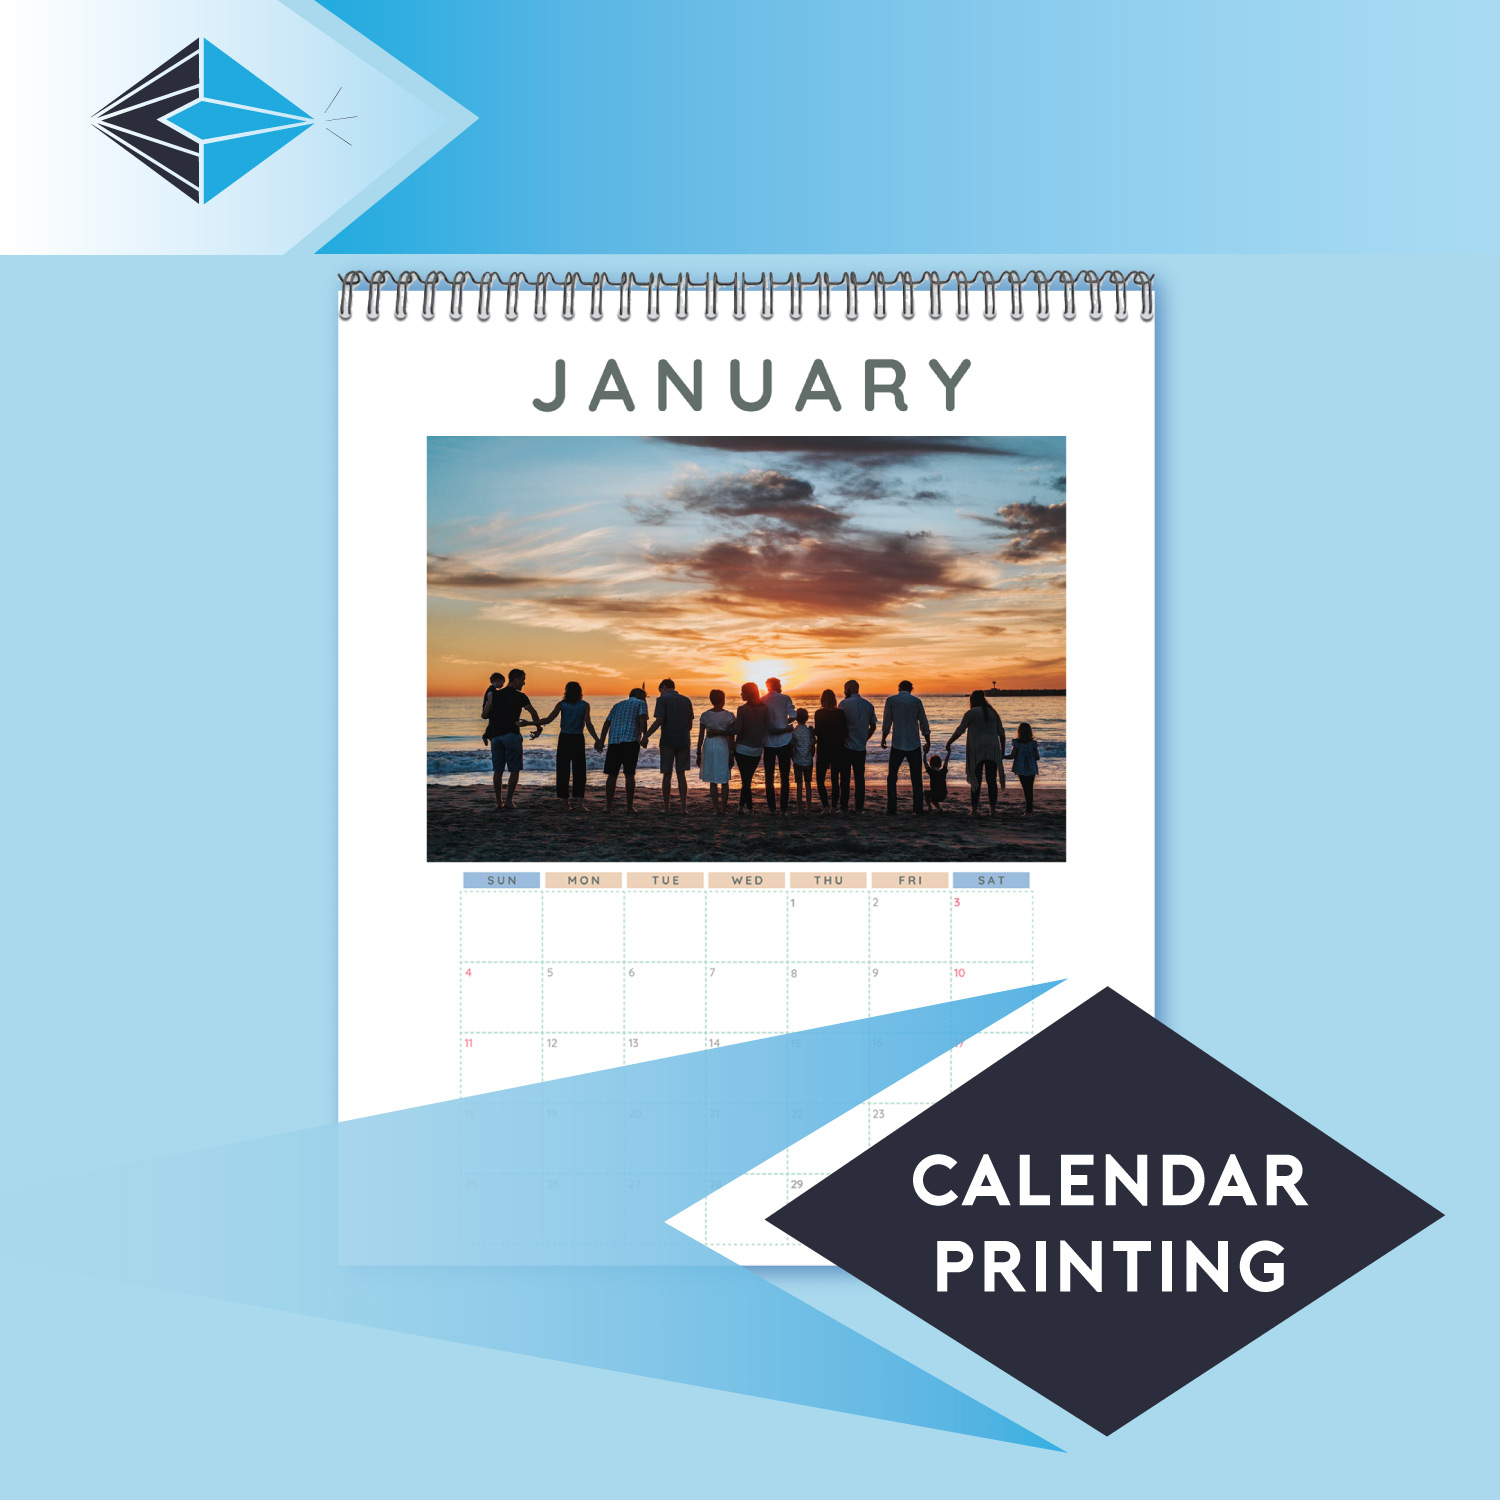 calendar printing personalised photo calendar gift hardcover calendar printers stockport manchester